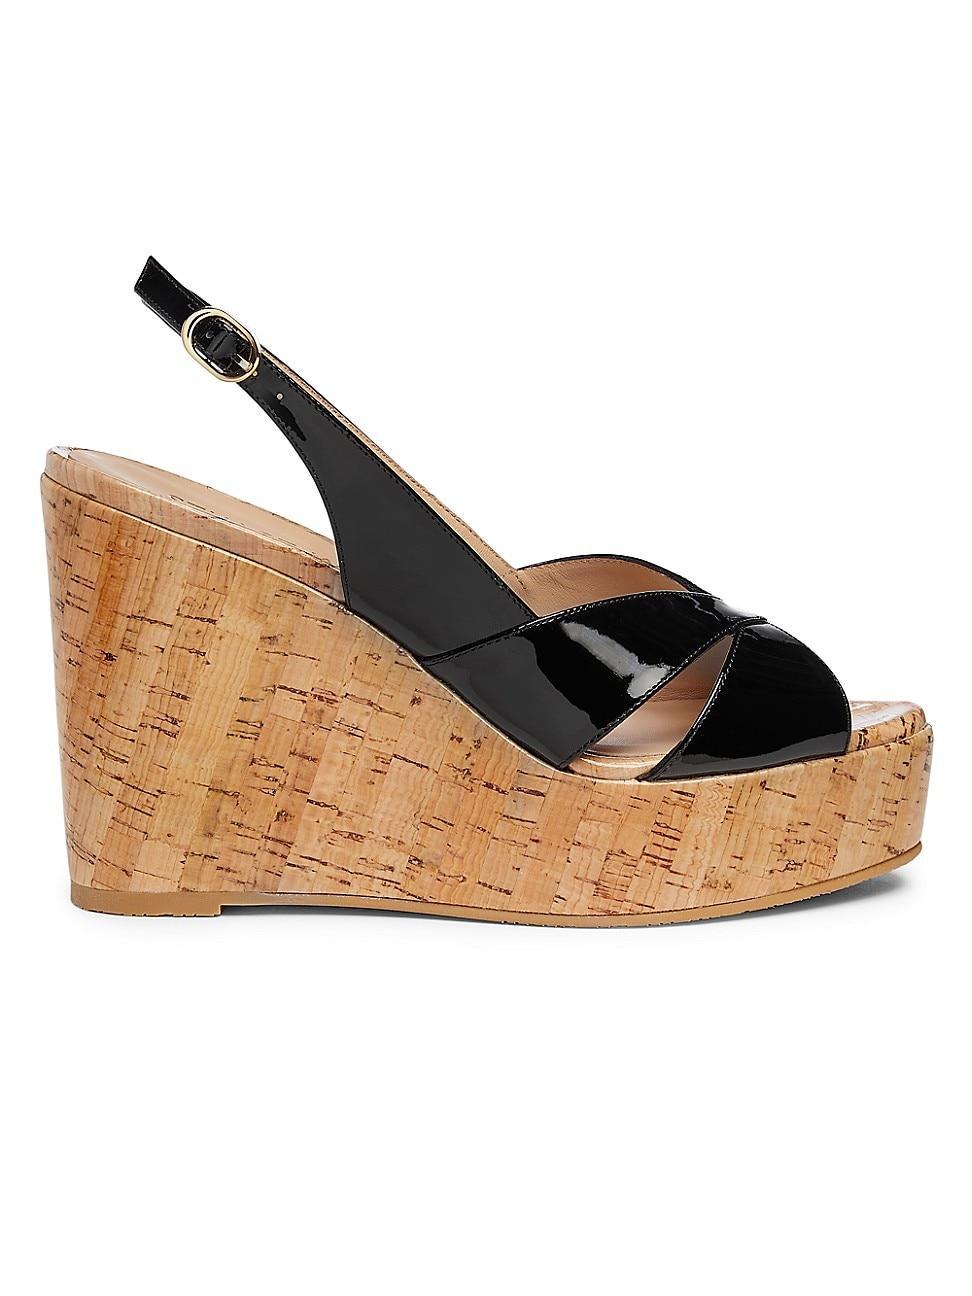 Carmen Patent Slingback Wedge Sandals Product Image